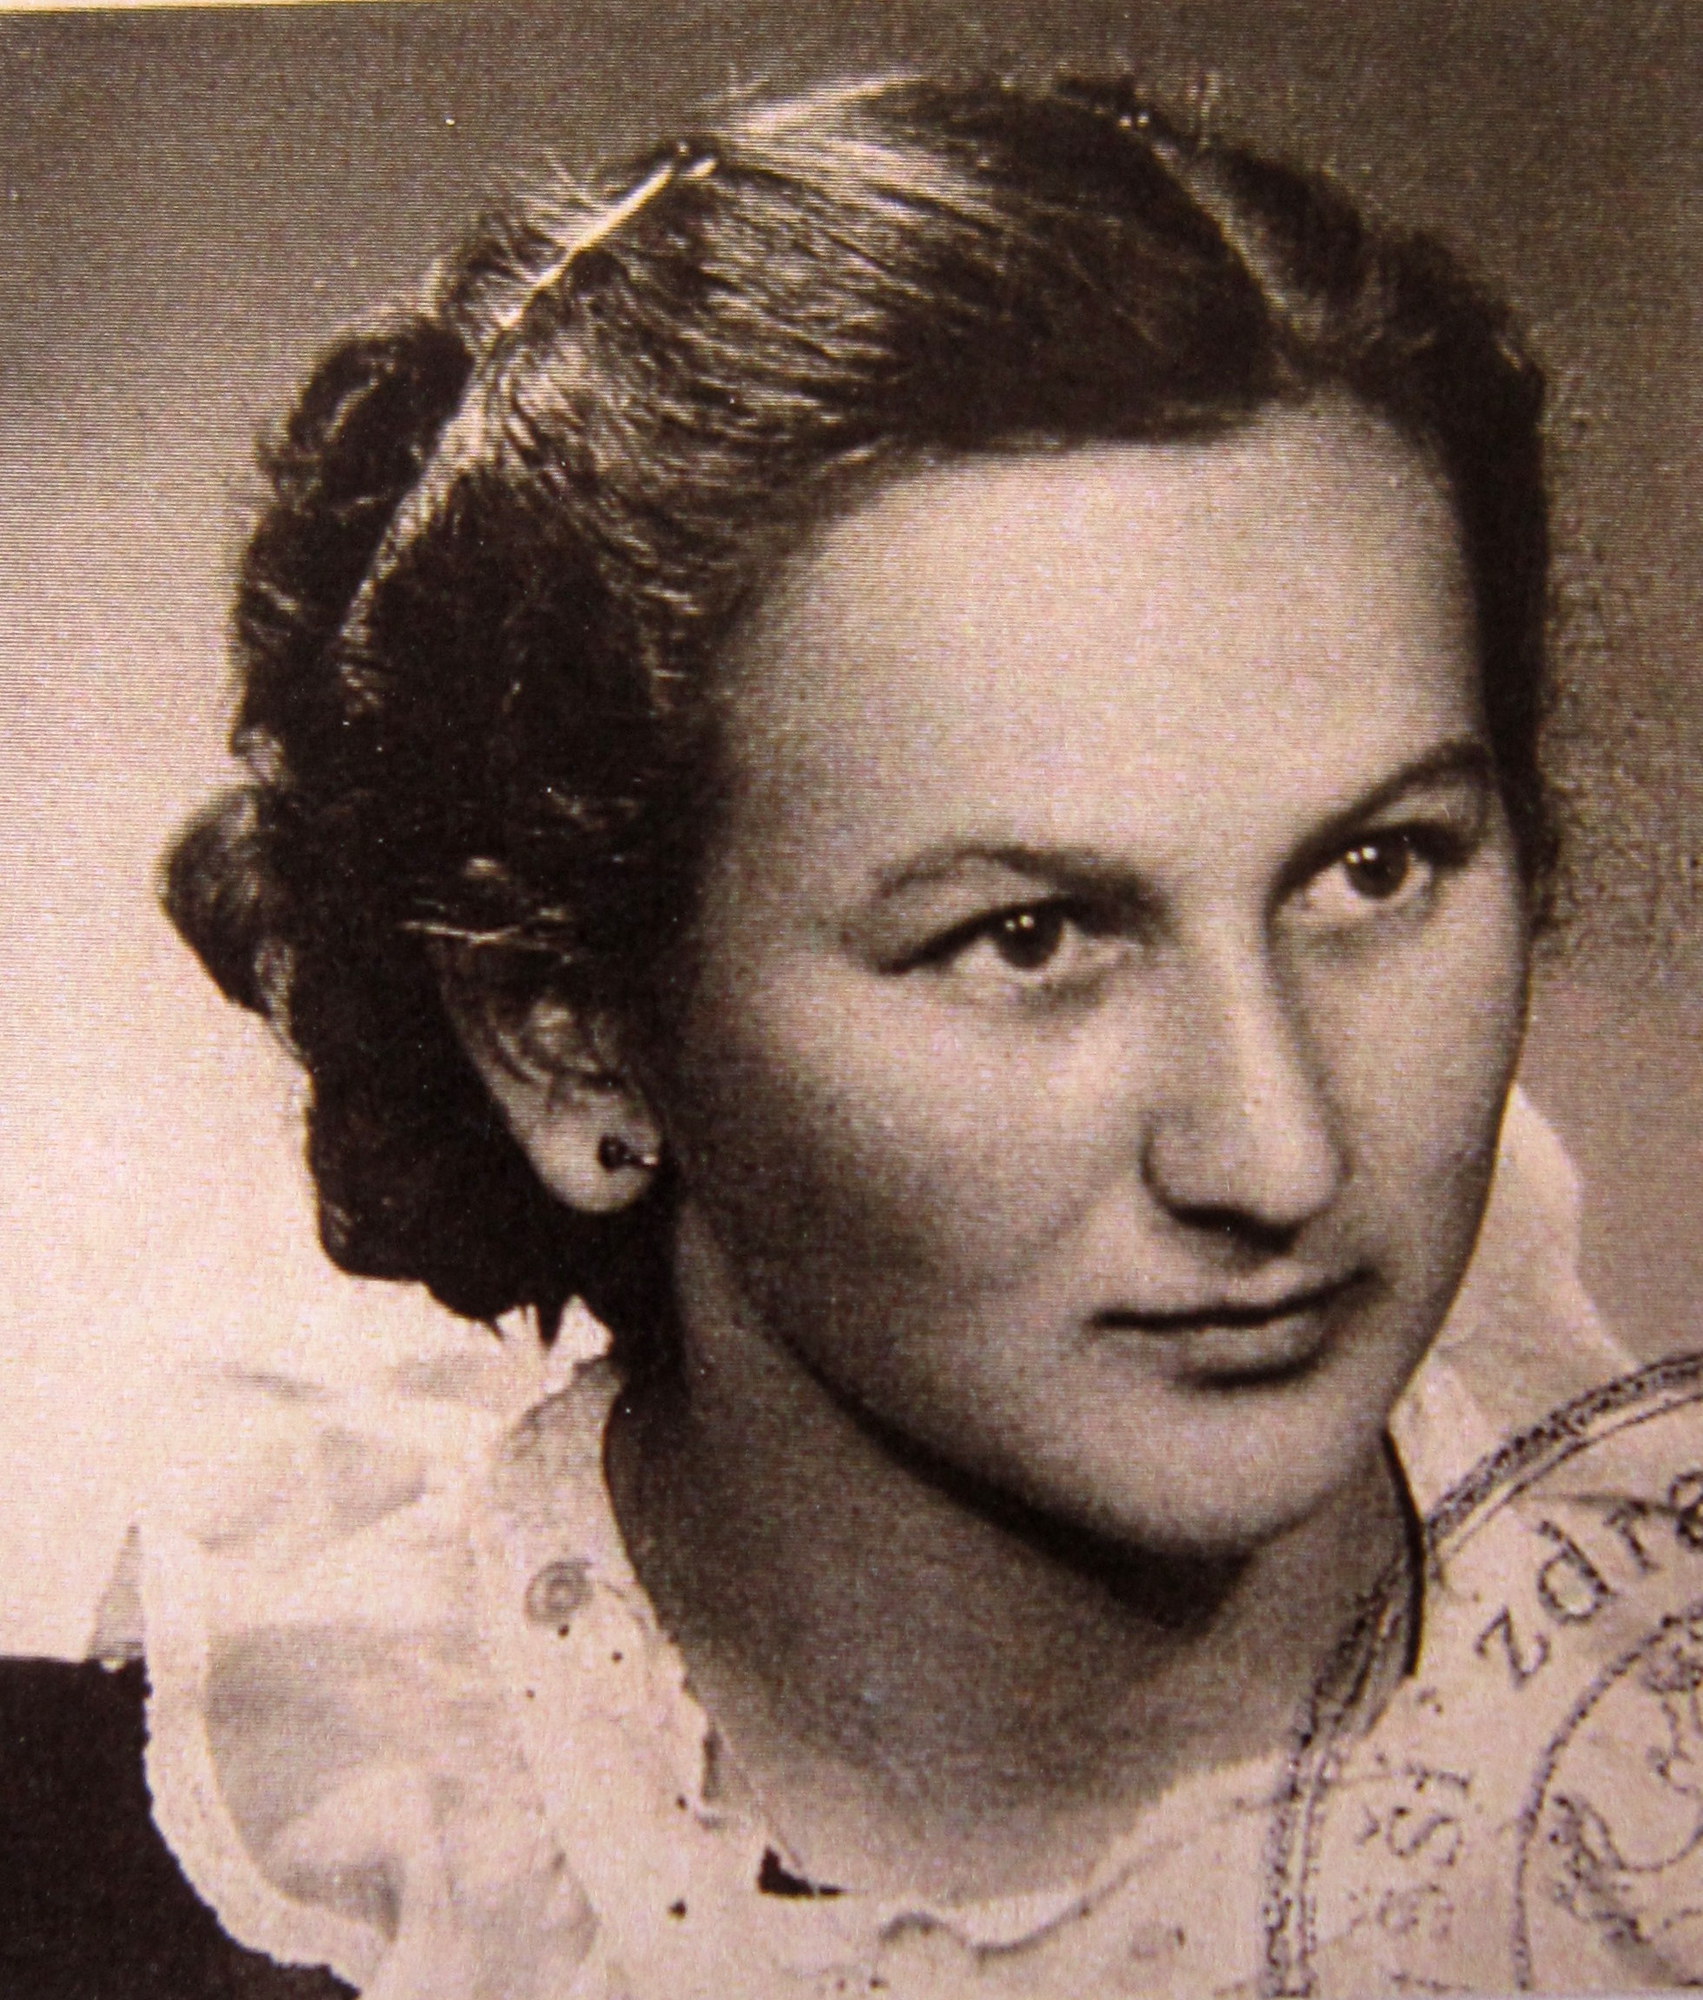 Růžena Prokešová as a young woman